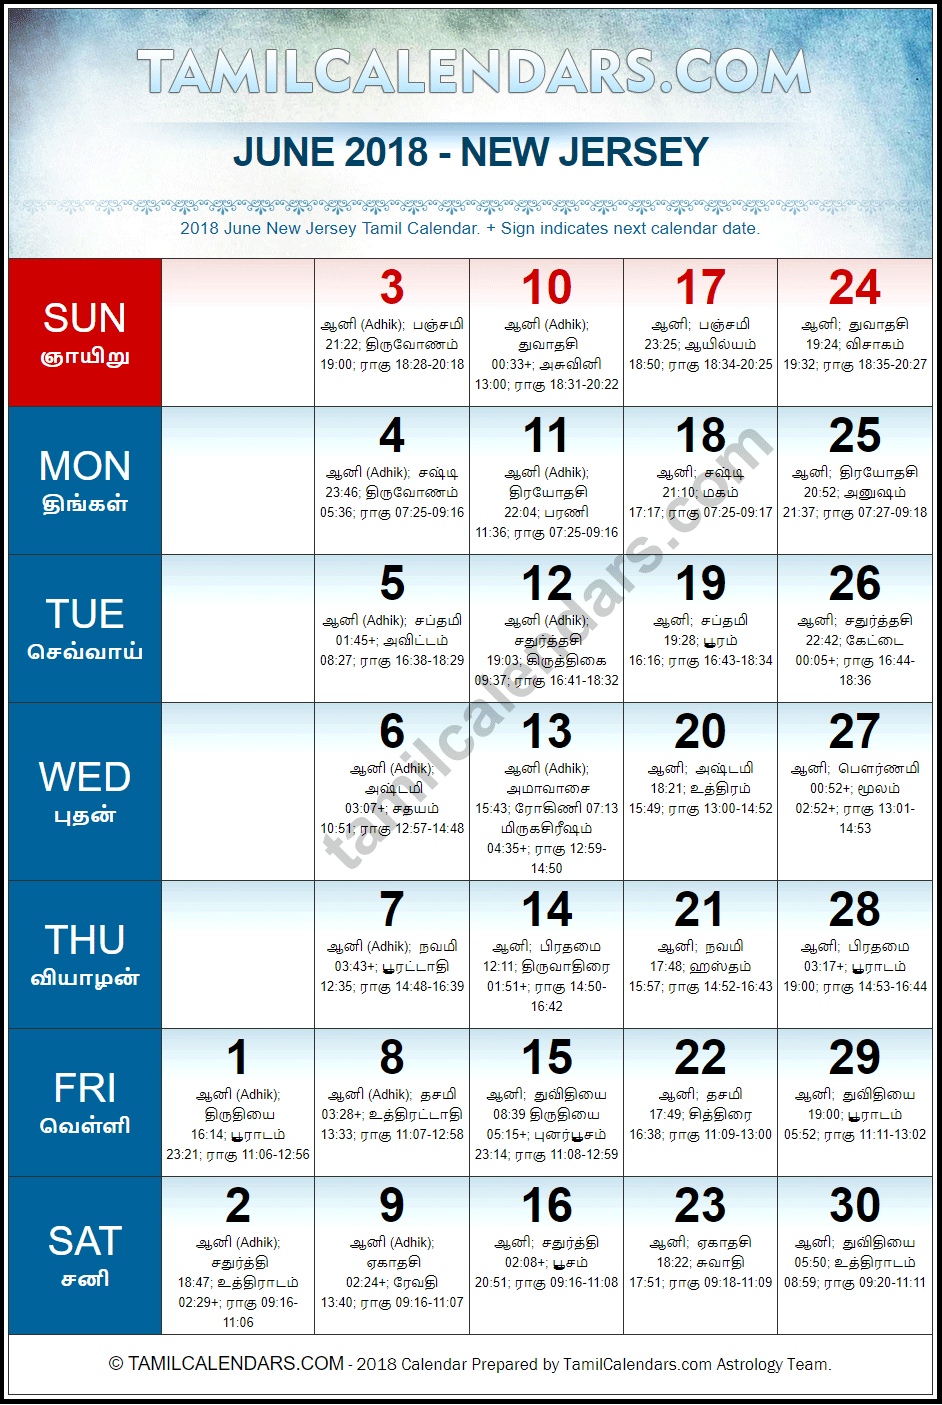 June 2018 Tamil Calendar for New Jersey, USA